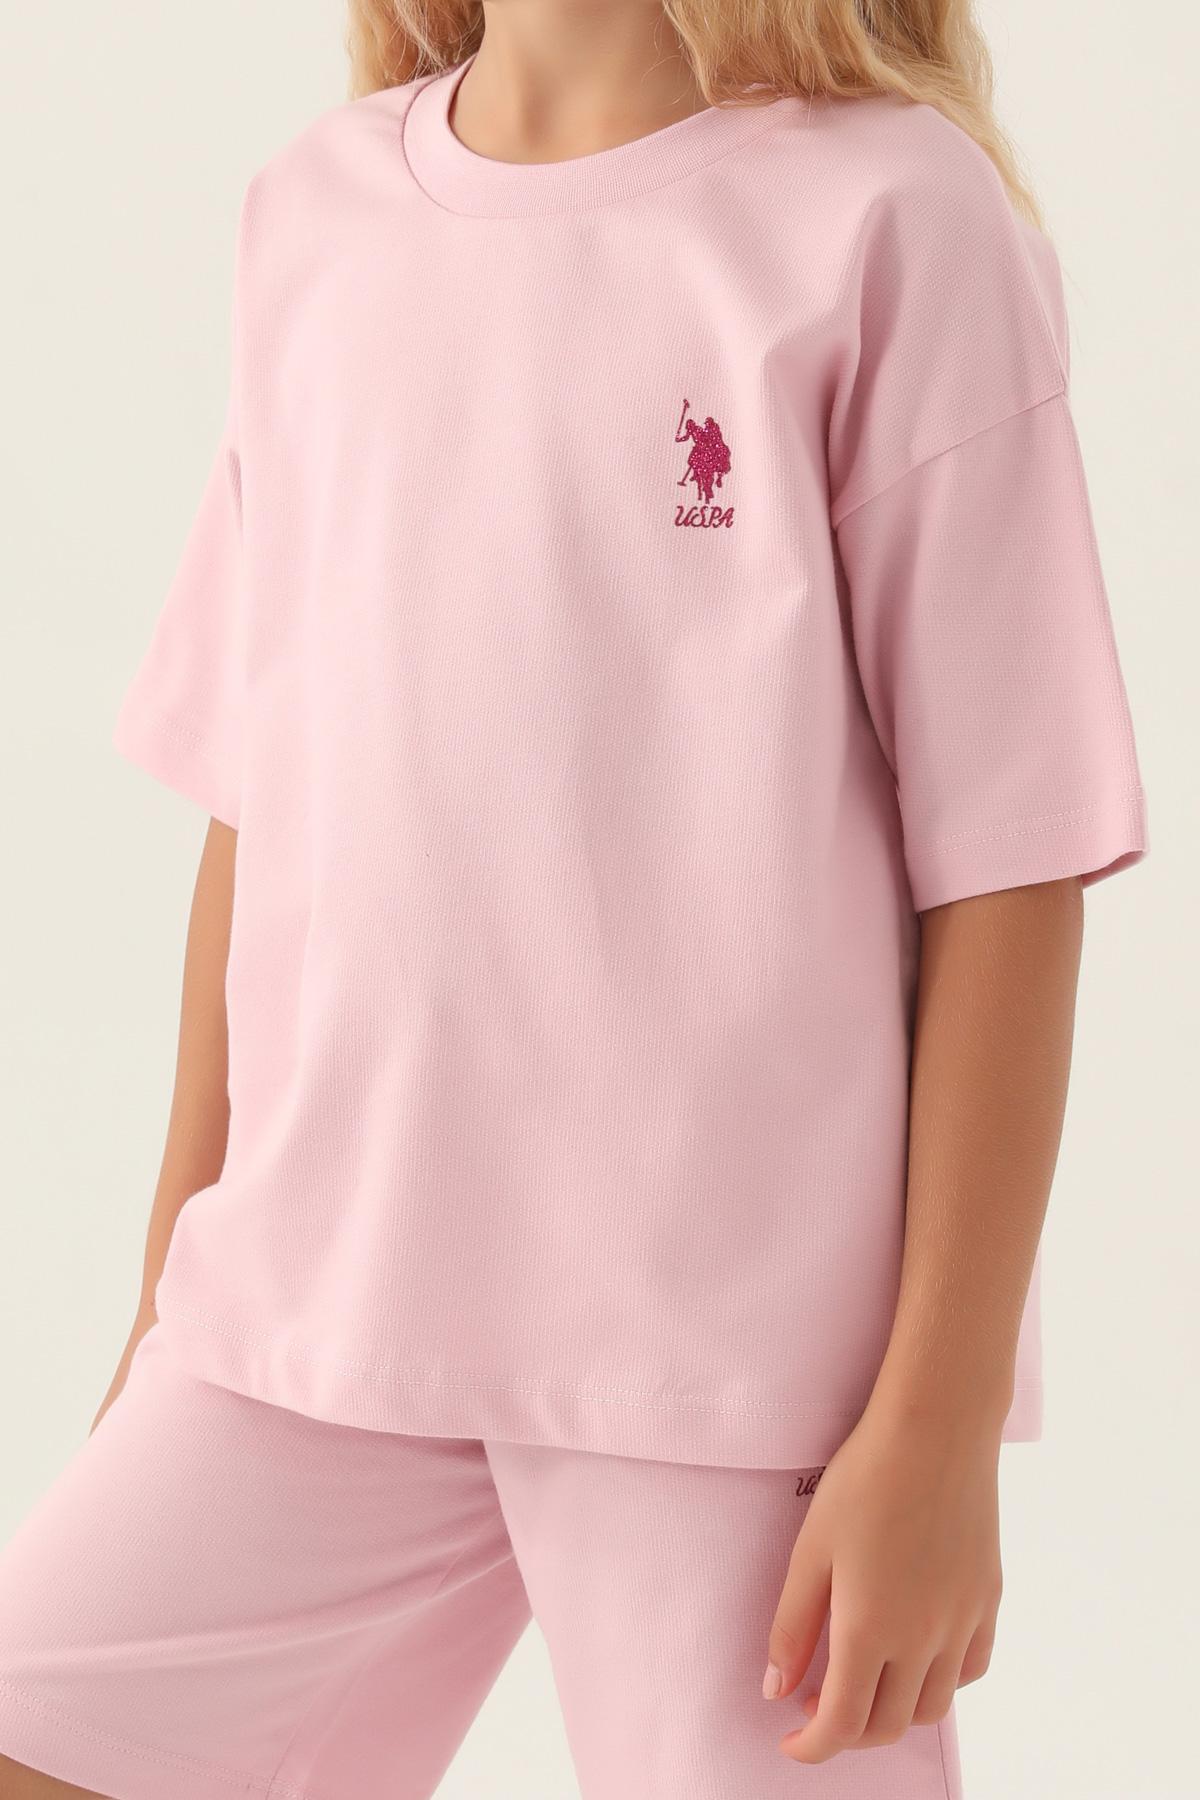 Selected image for U.S. Polo Assn. Komplet za devojčice US1822-4, Roze